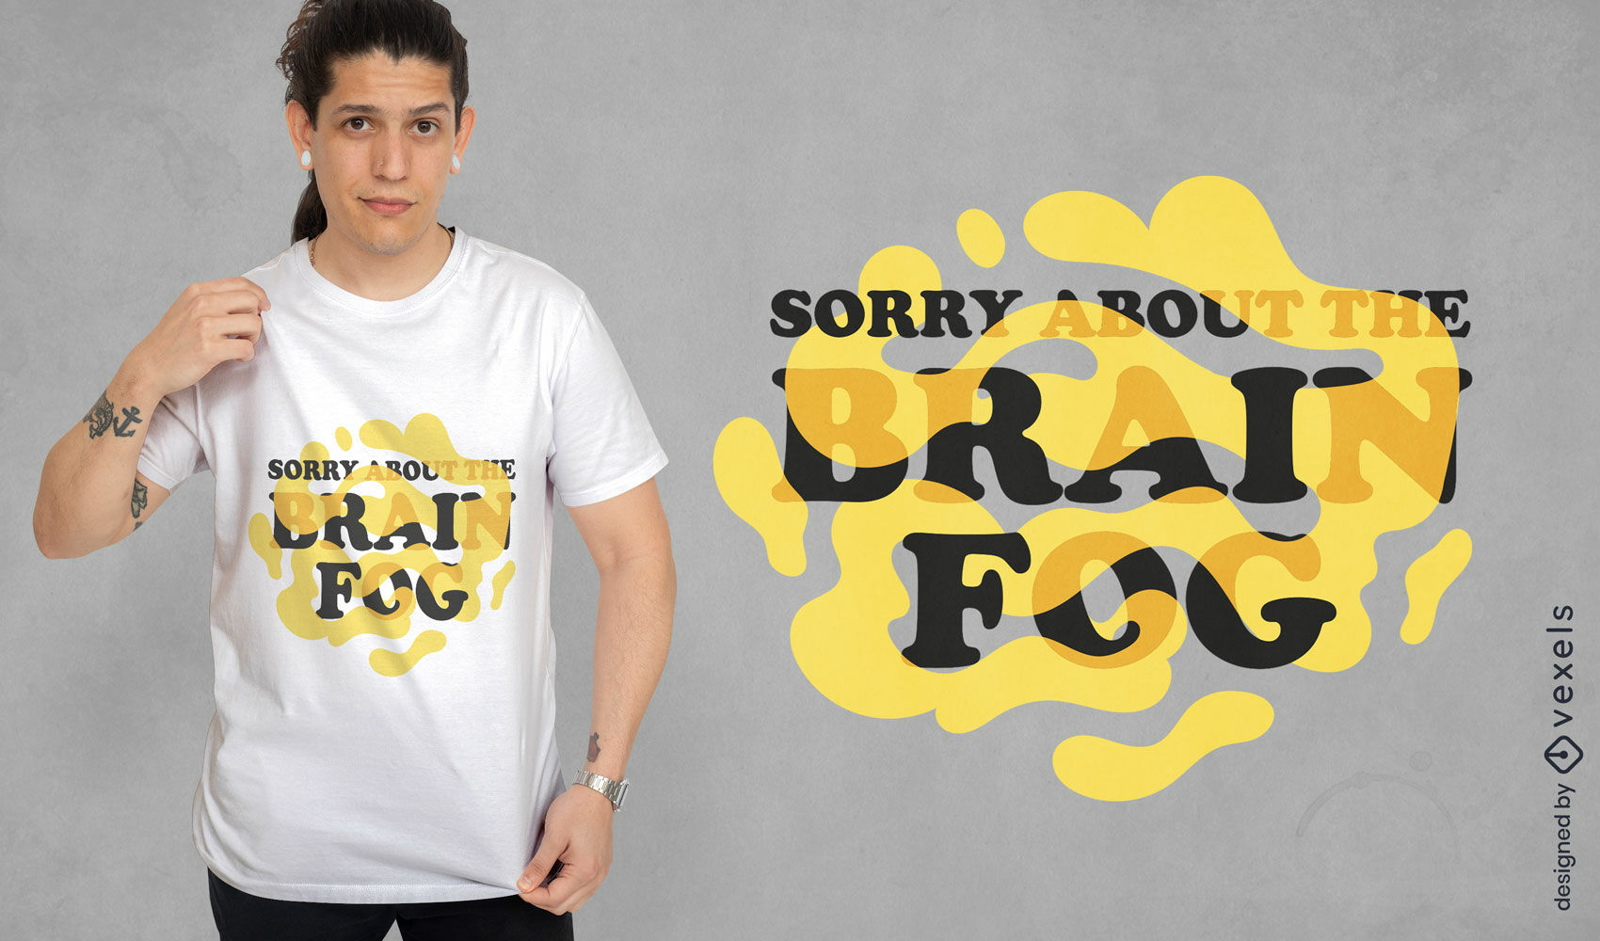 Brain fog quote funny t-shirt design